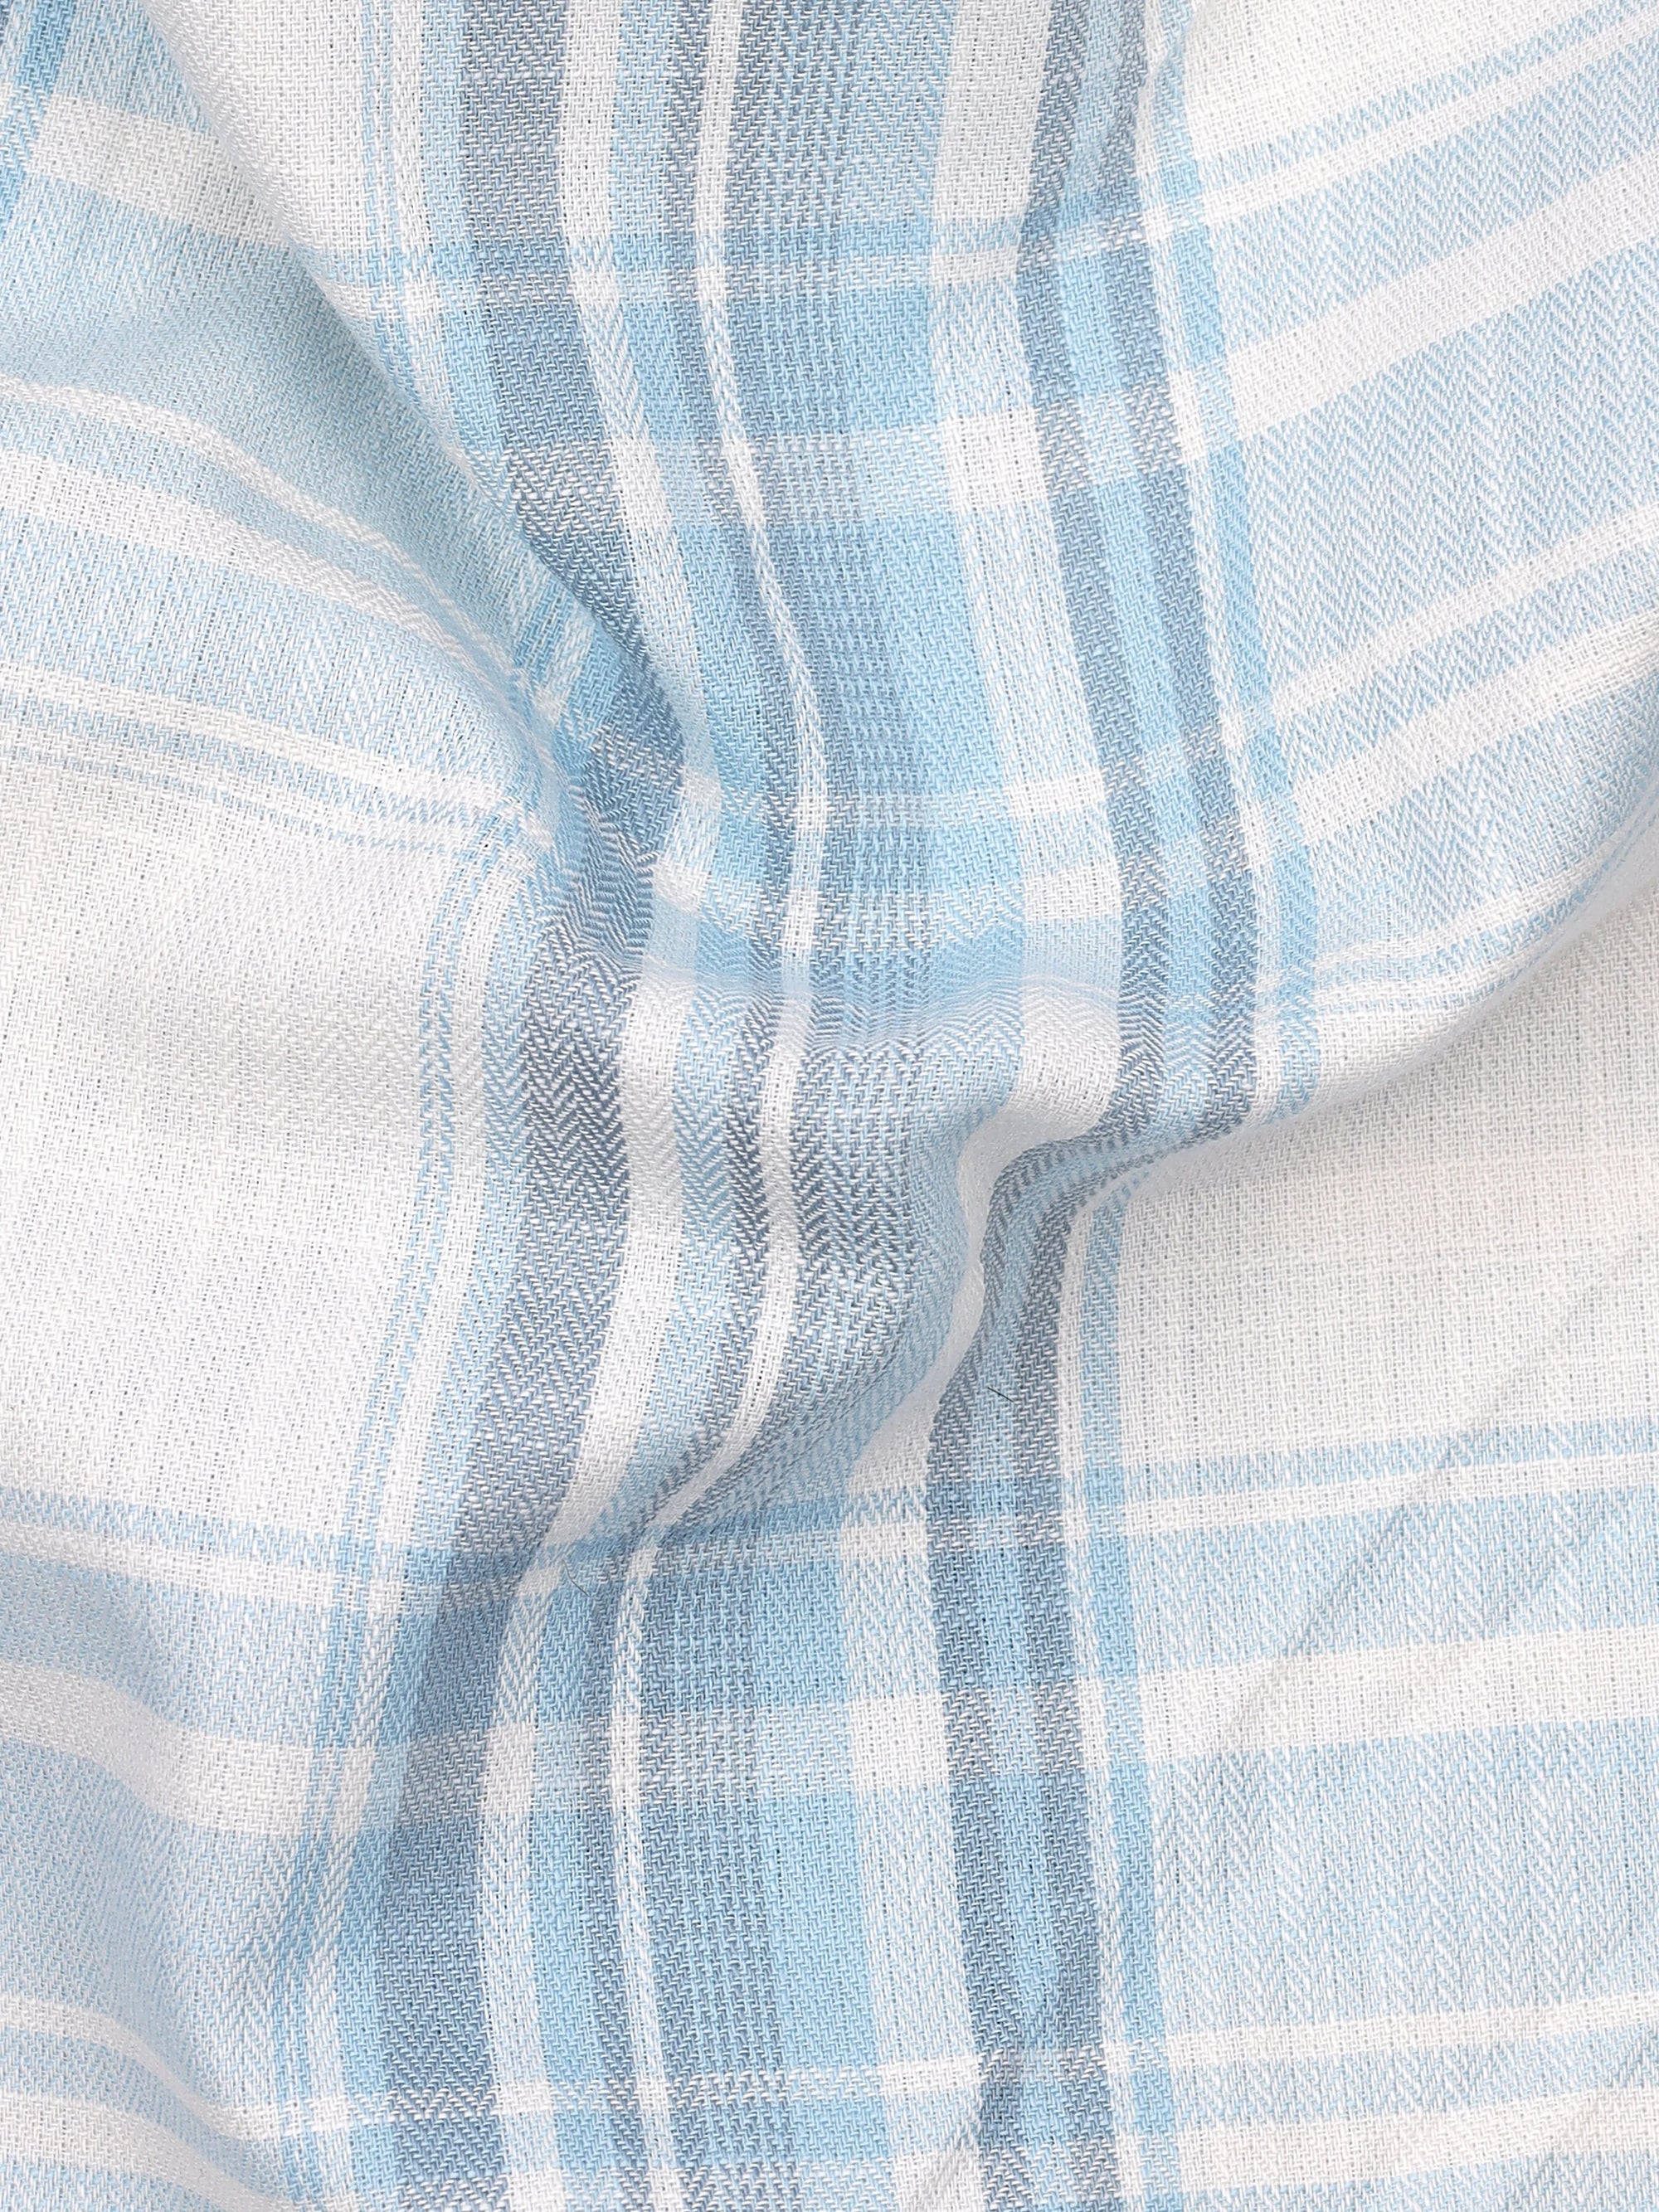 White Dove With Steel Blue-Gray Chevron Checks Premium Cotton Shirt